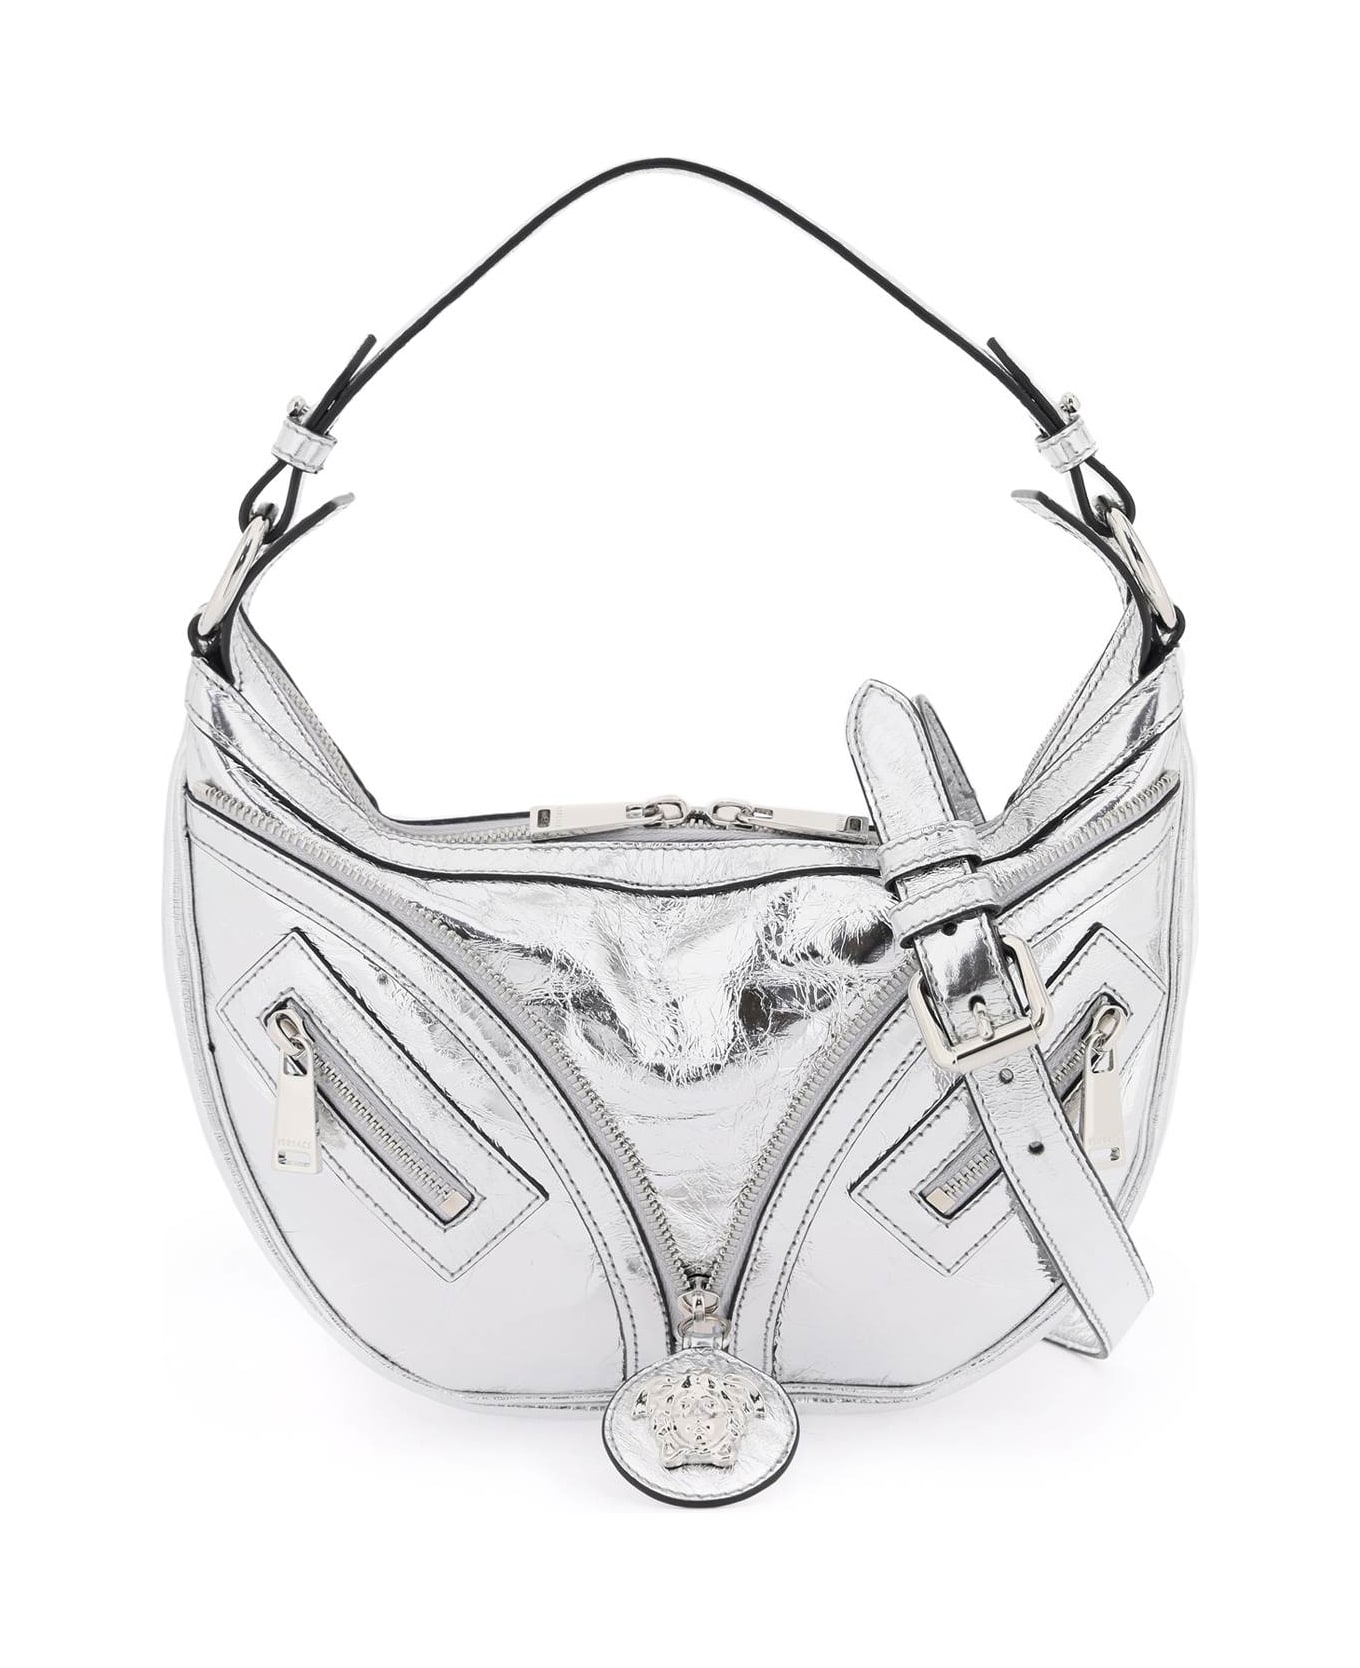 Versace Repeat Leather Shoulder Bag - P Silver Palladium トートバッグ